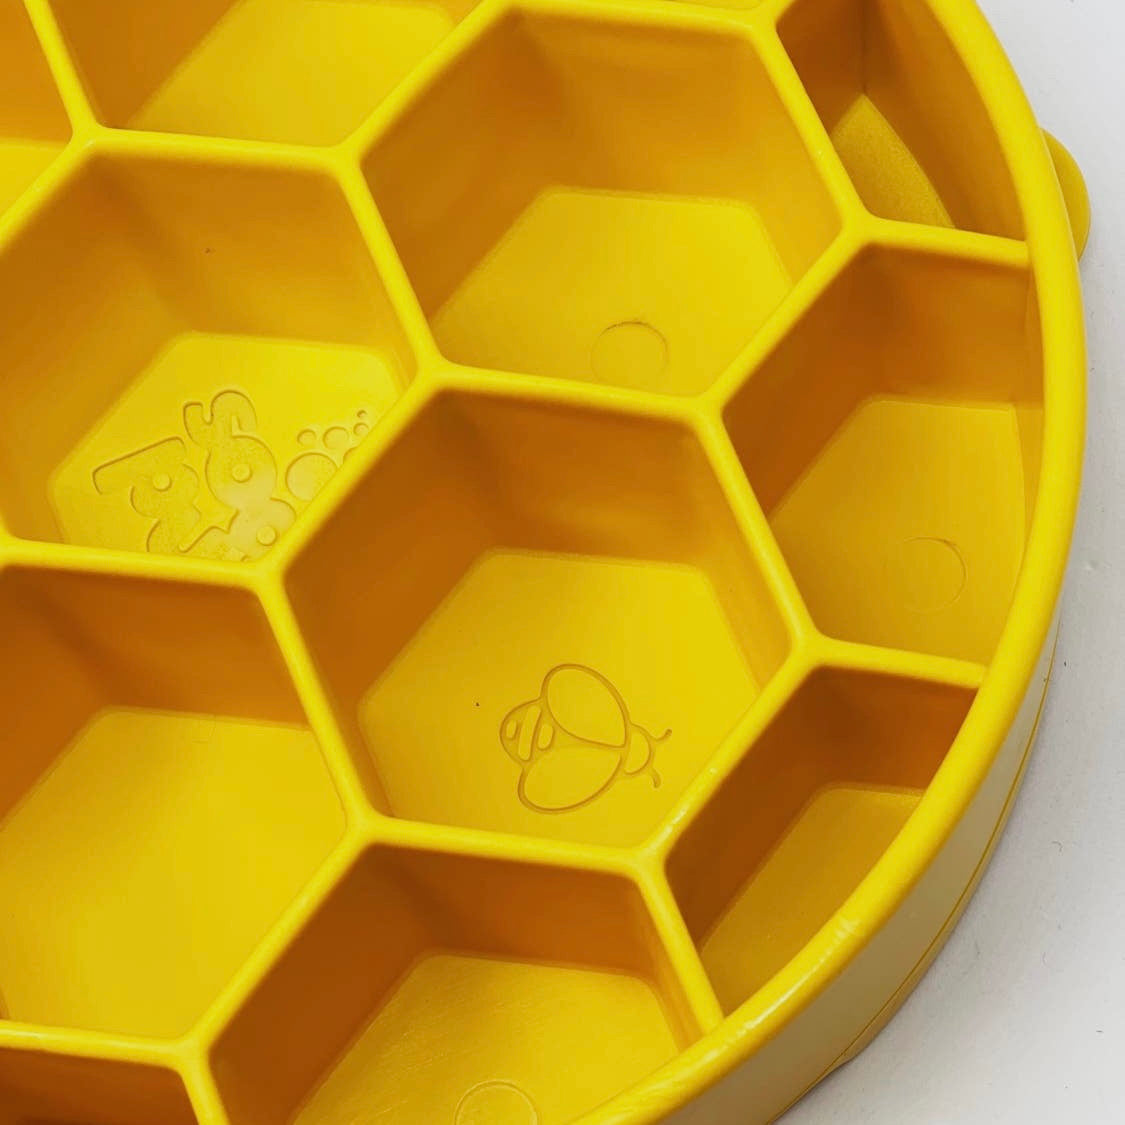 SodaPup Honeycomb Design eBowl Enrichment Slow Feeder Bowl